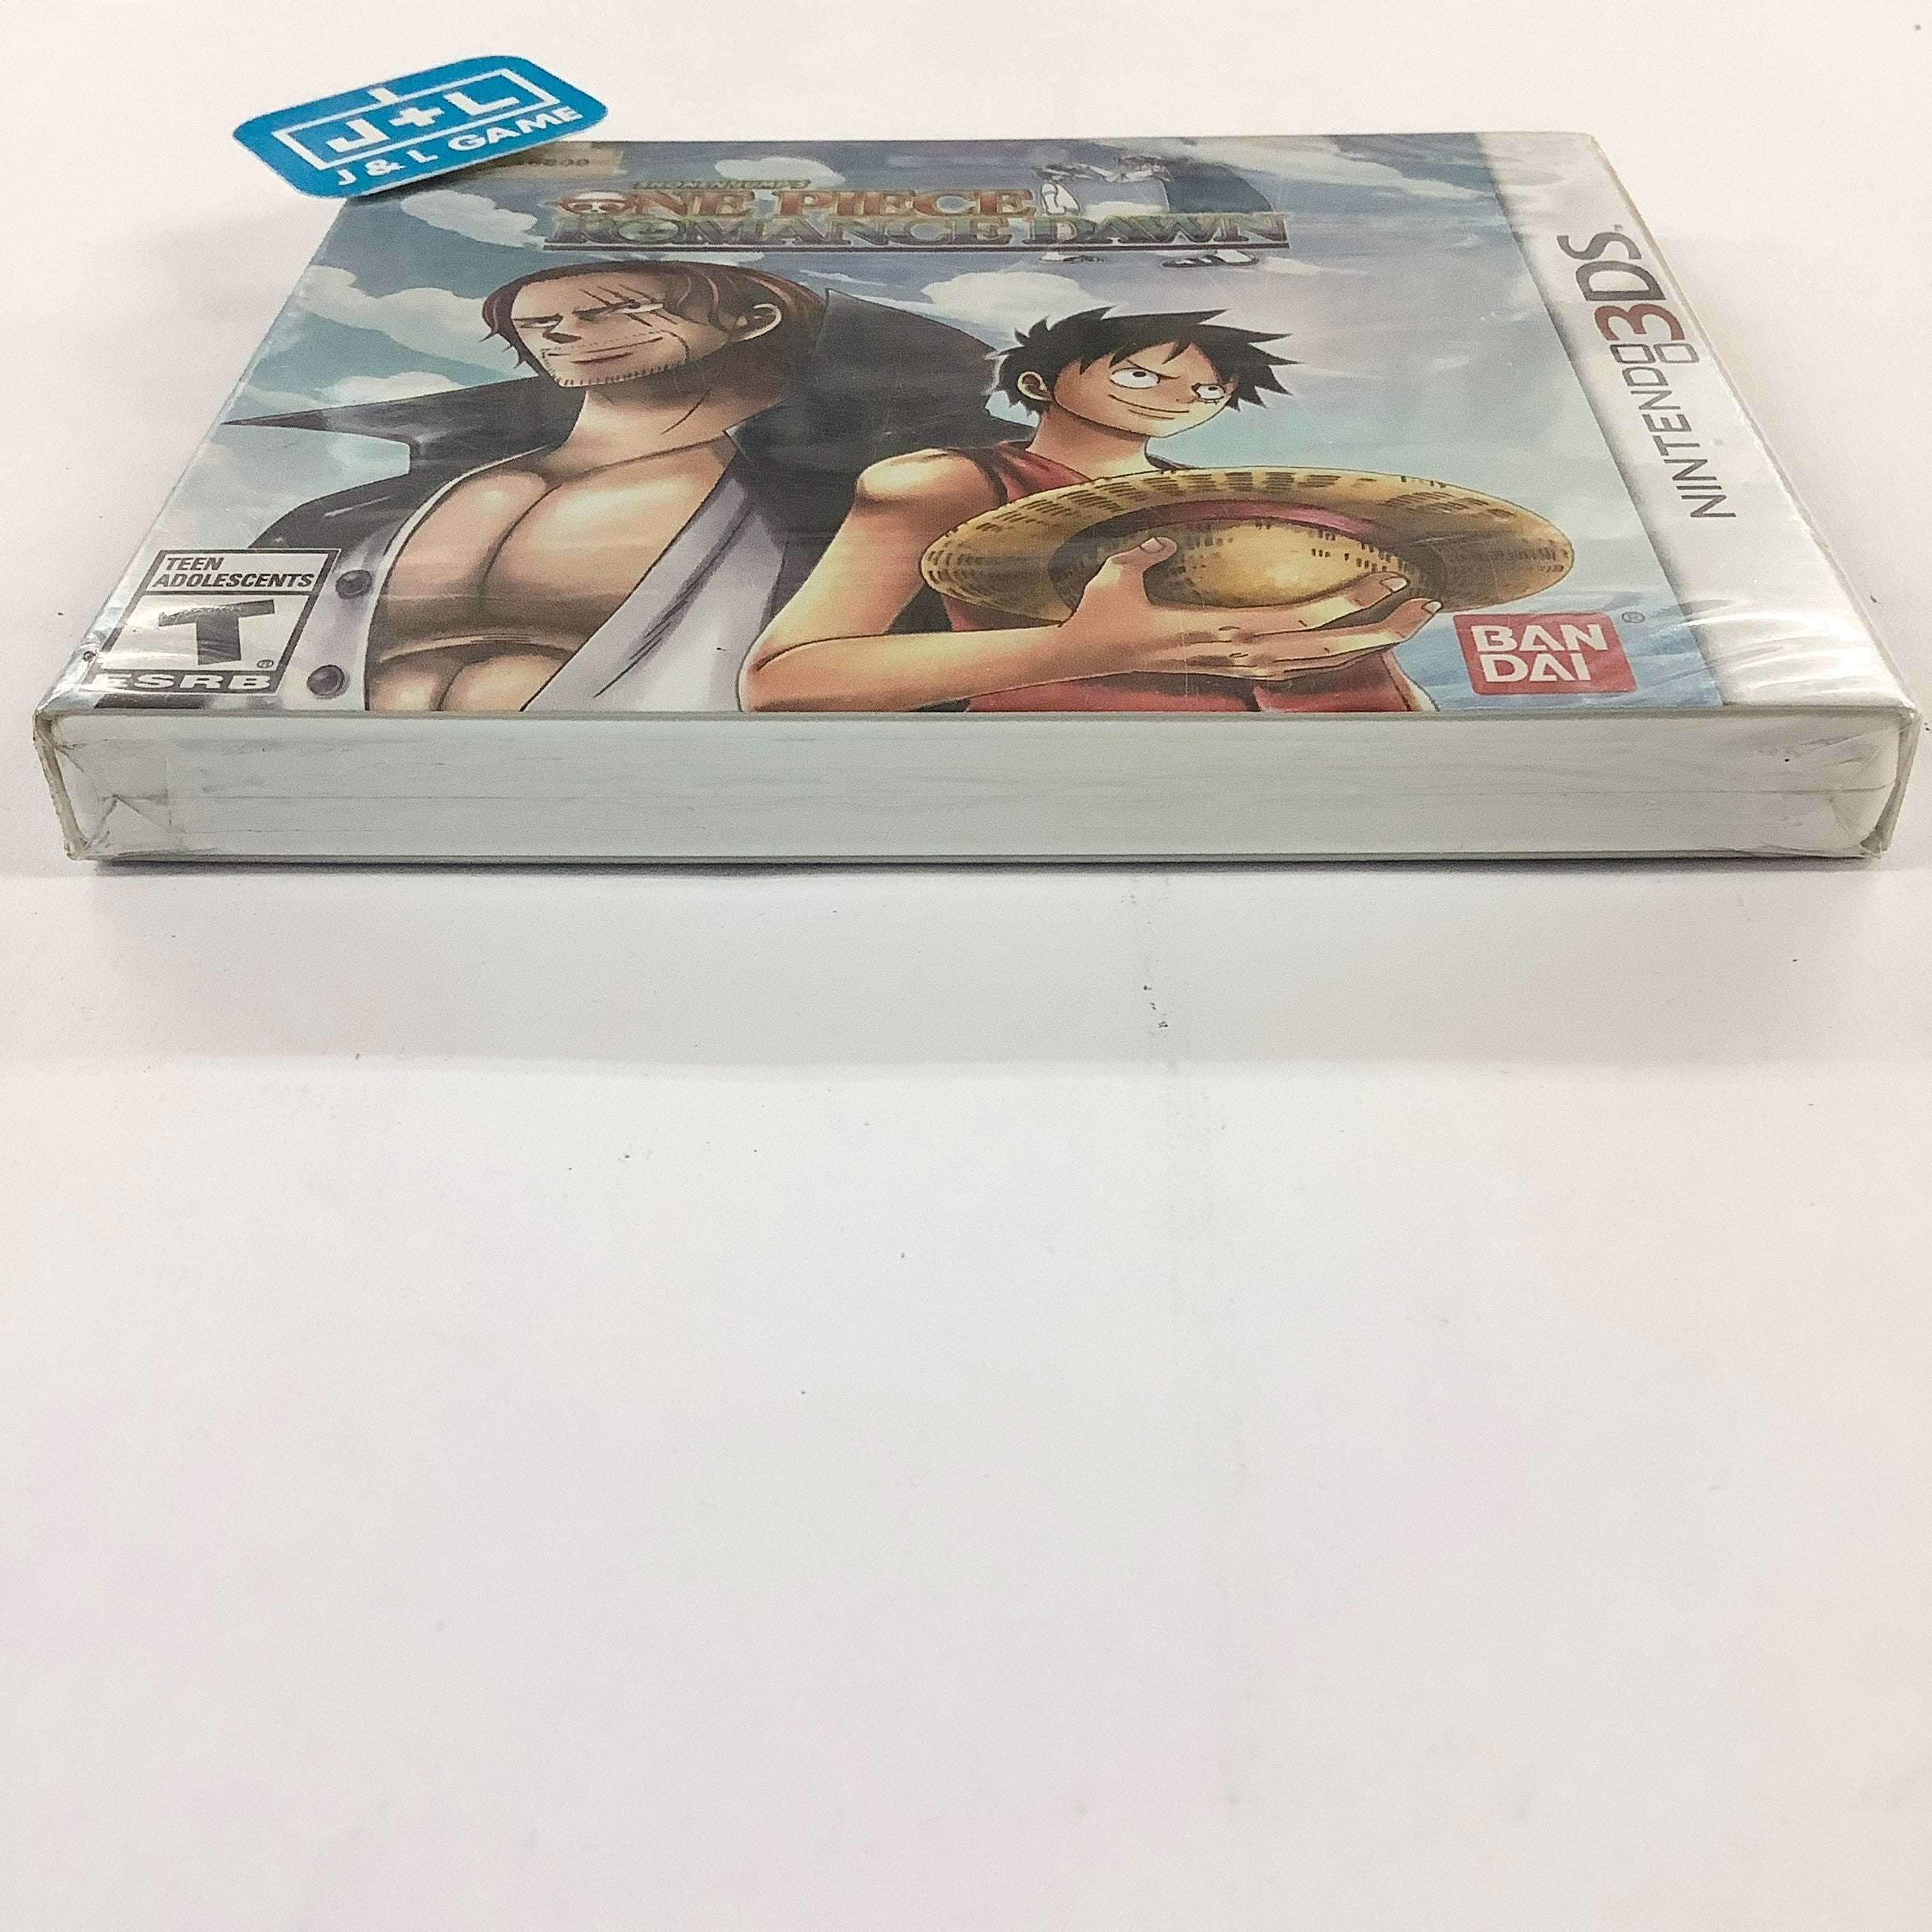 One Piece: Romance Dawn - Nintendo 3DS Video Games BANDAI NAMCO Entertainment   